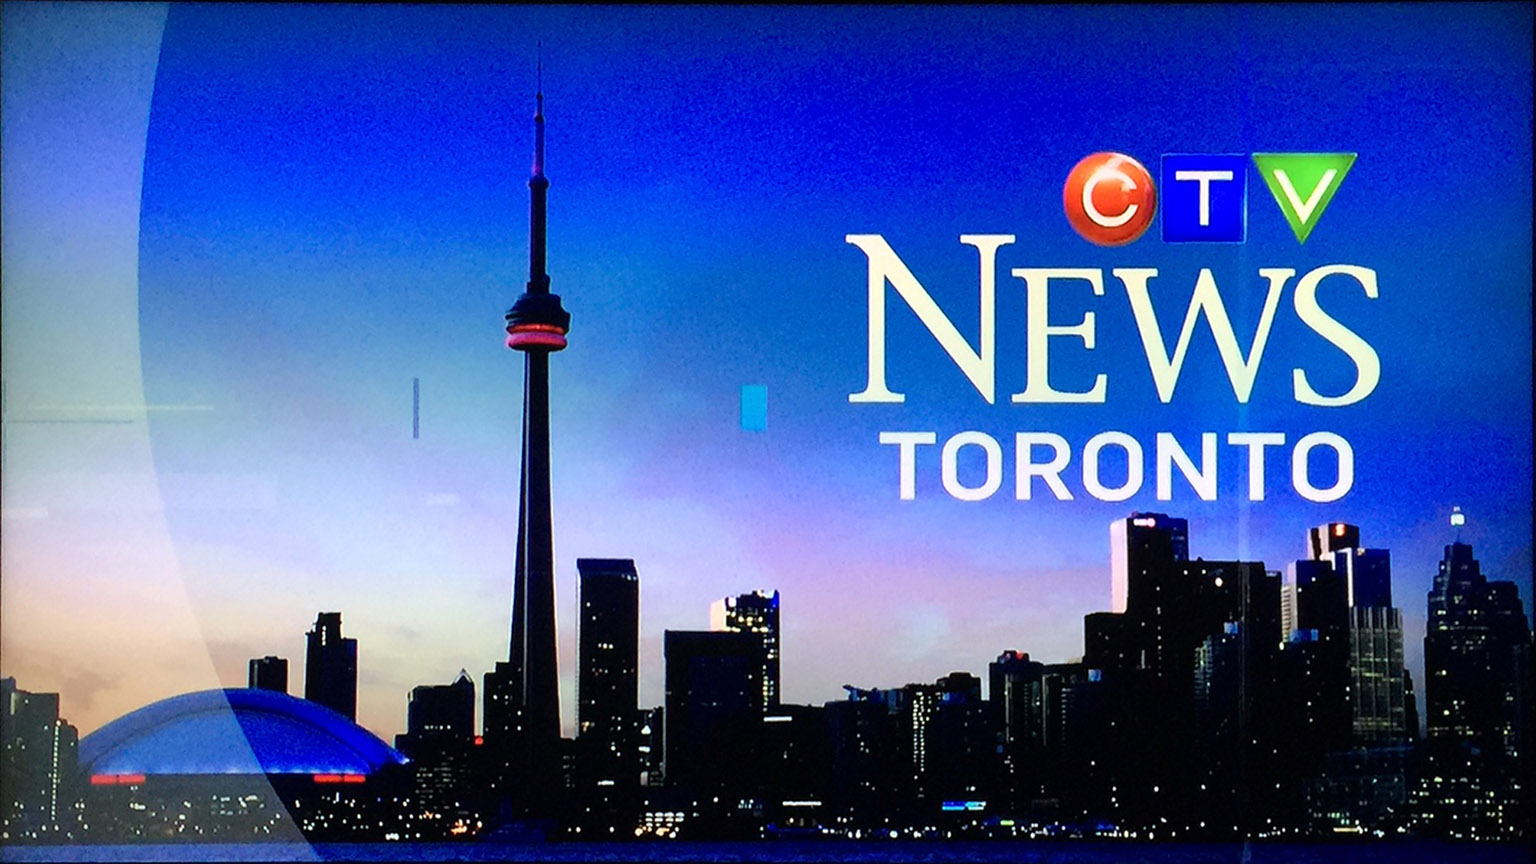 Toronto CTV News 2017-02-06 1130pm - part 1